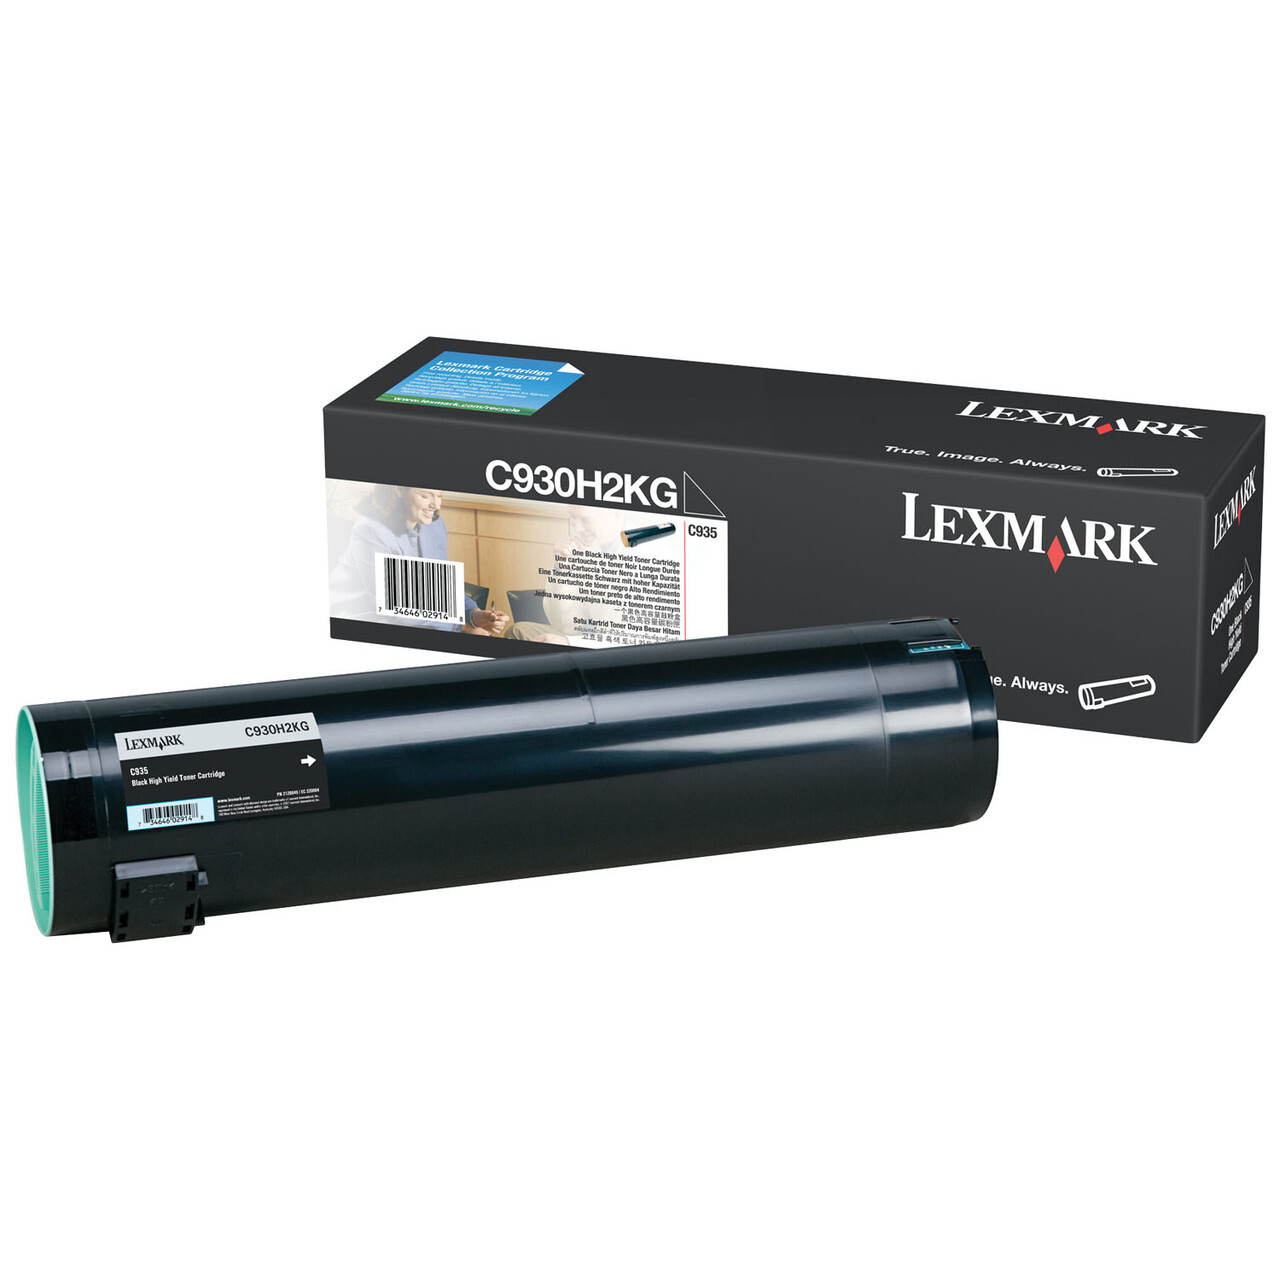 Lexmark Genuine C935 Cyan 24K Toner Cartridge C930H2CG - New, Open Box Full Size Image